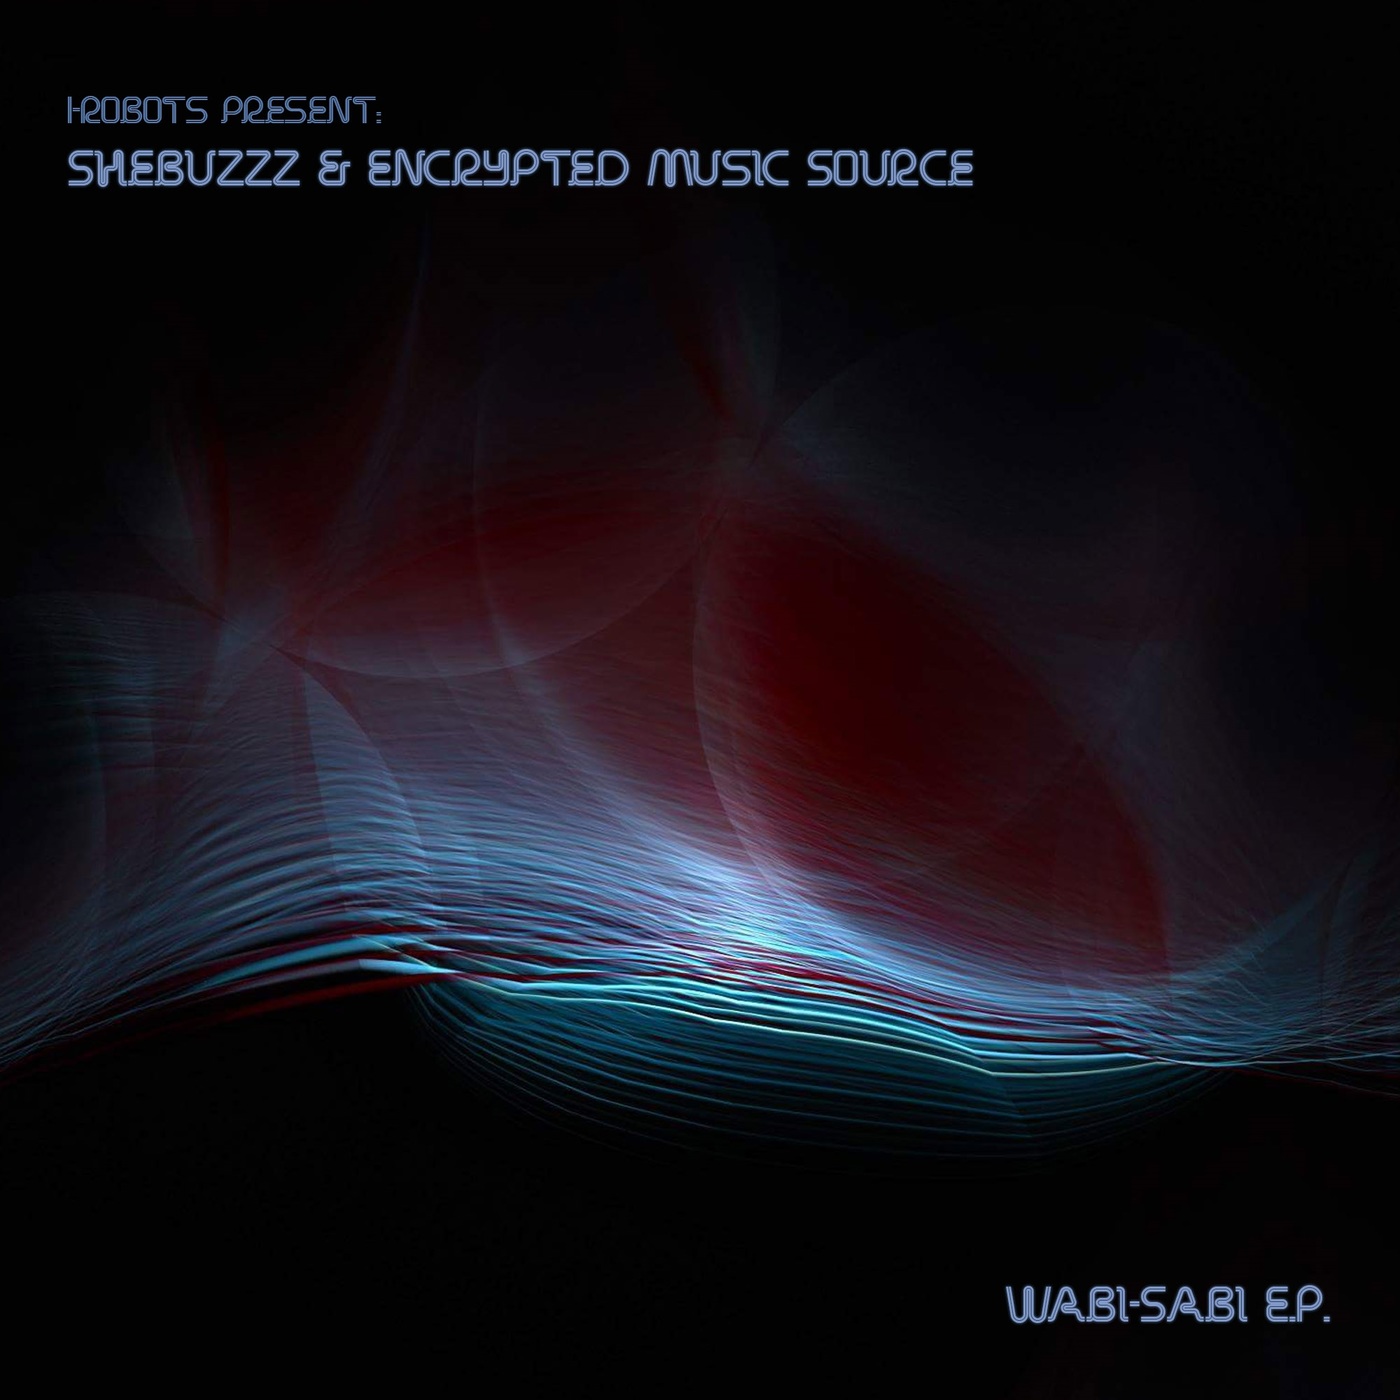 I-Robots present: Shebuzzz & Encrypted Music Source - Wabi-Sabi E.P. / OPILEC MUSIC